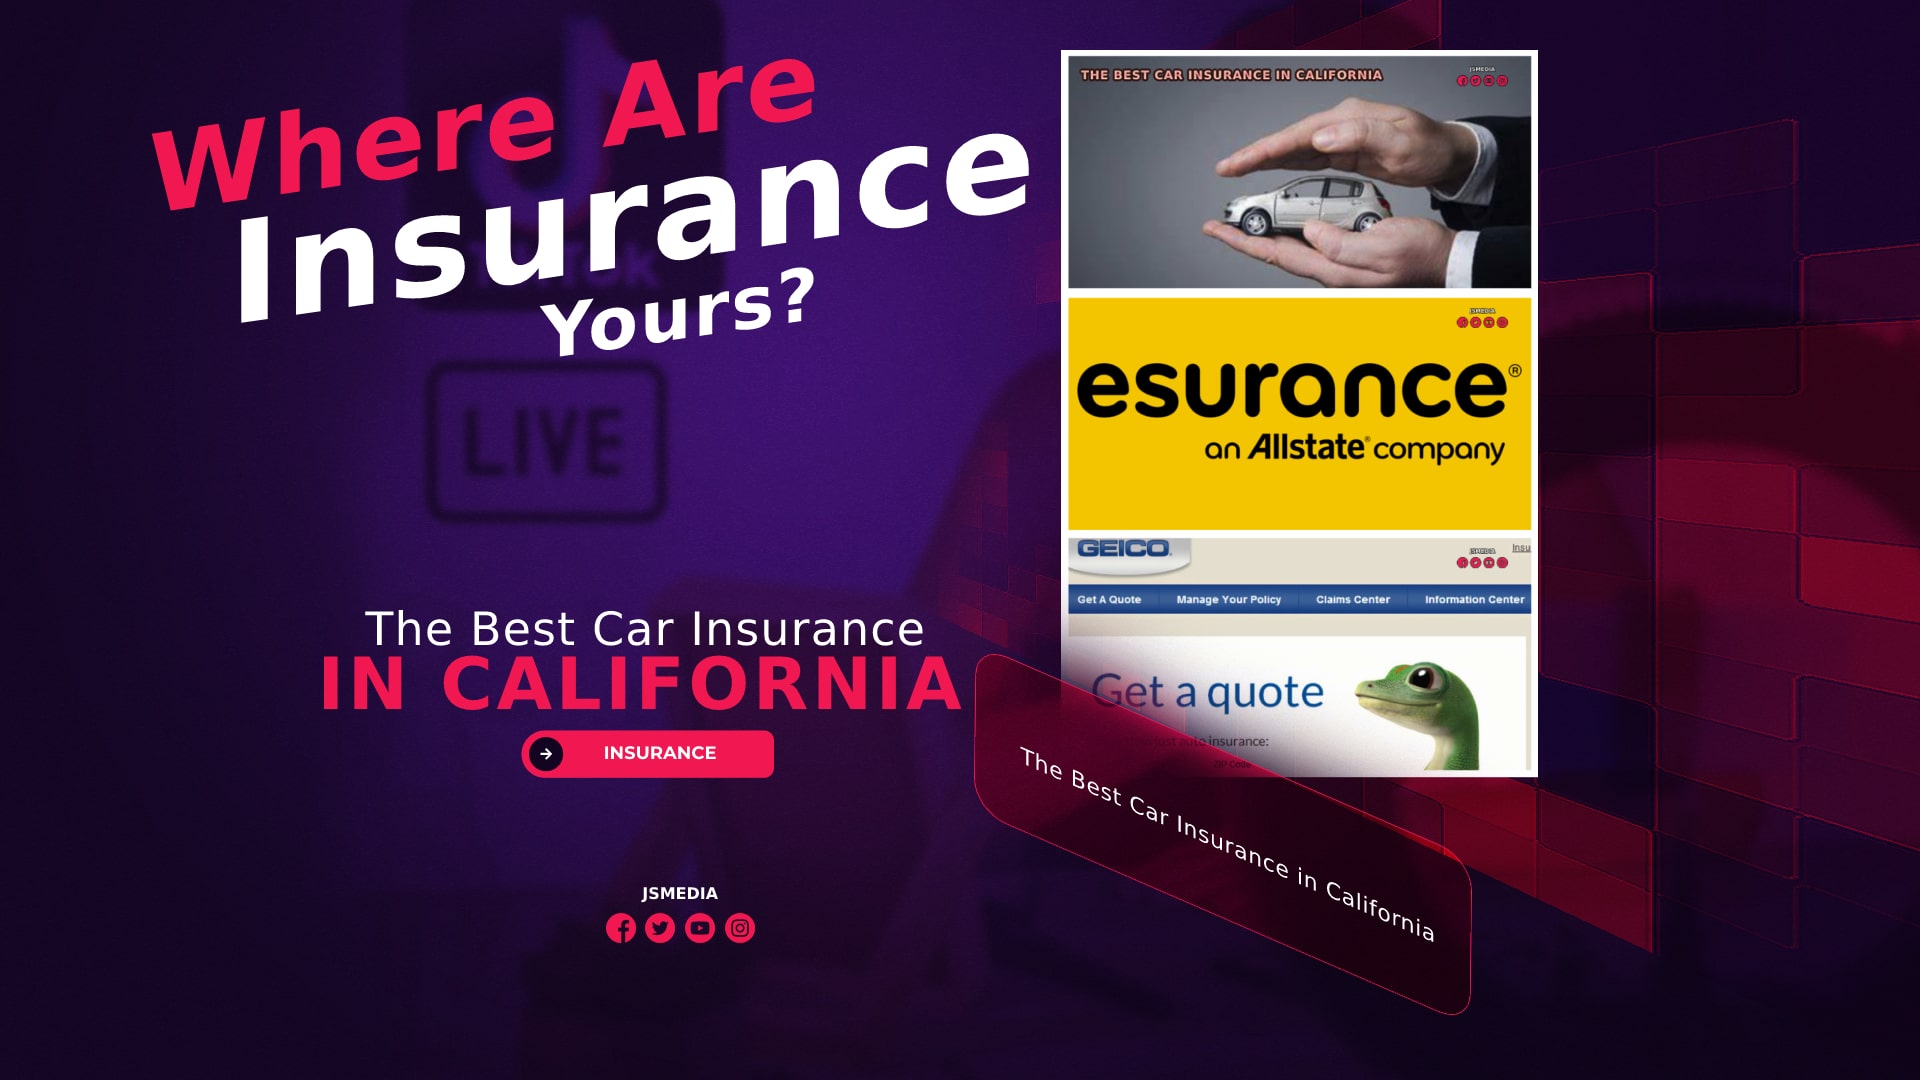 Auto Insurance - The Best Car Insurance in California